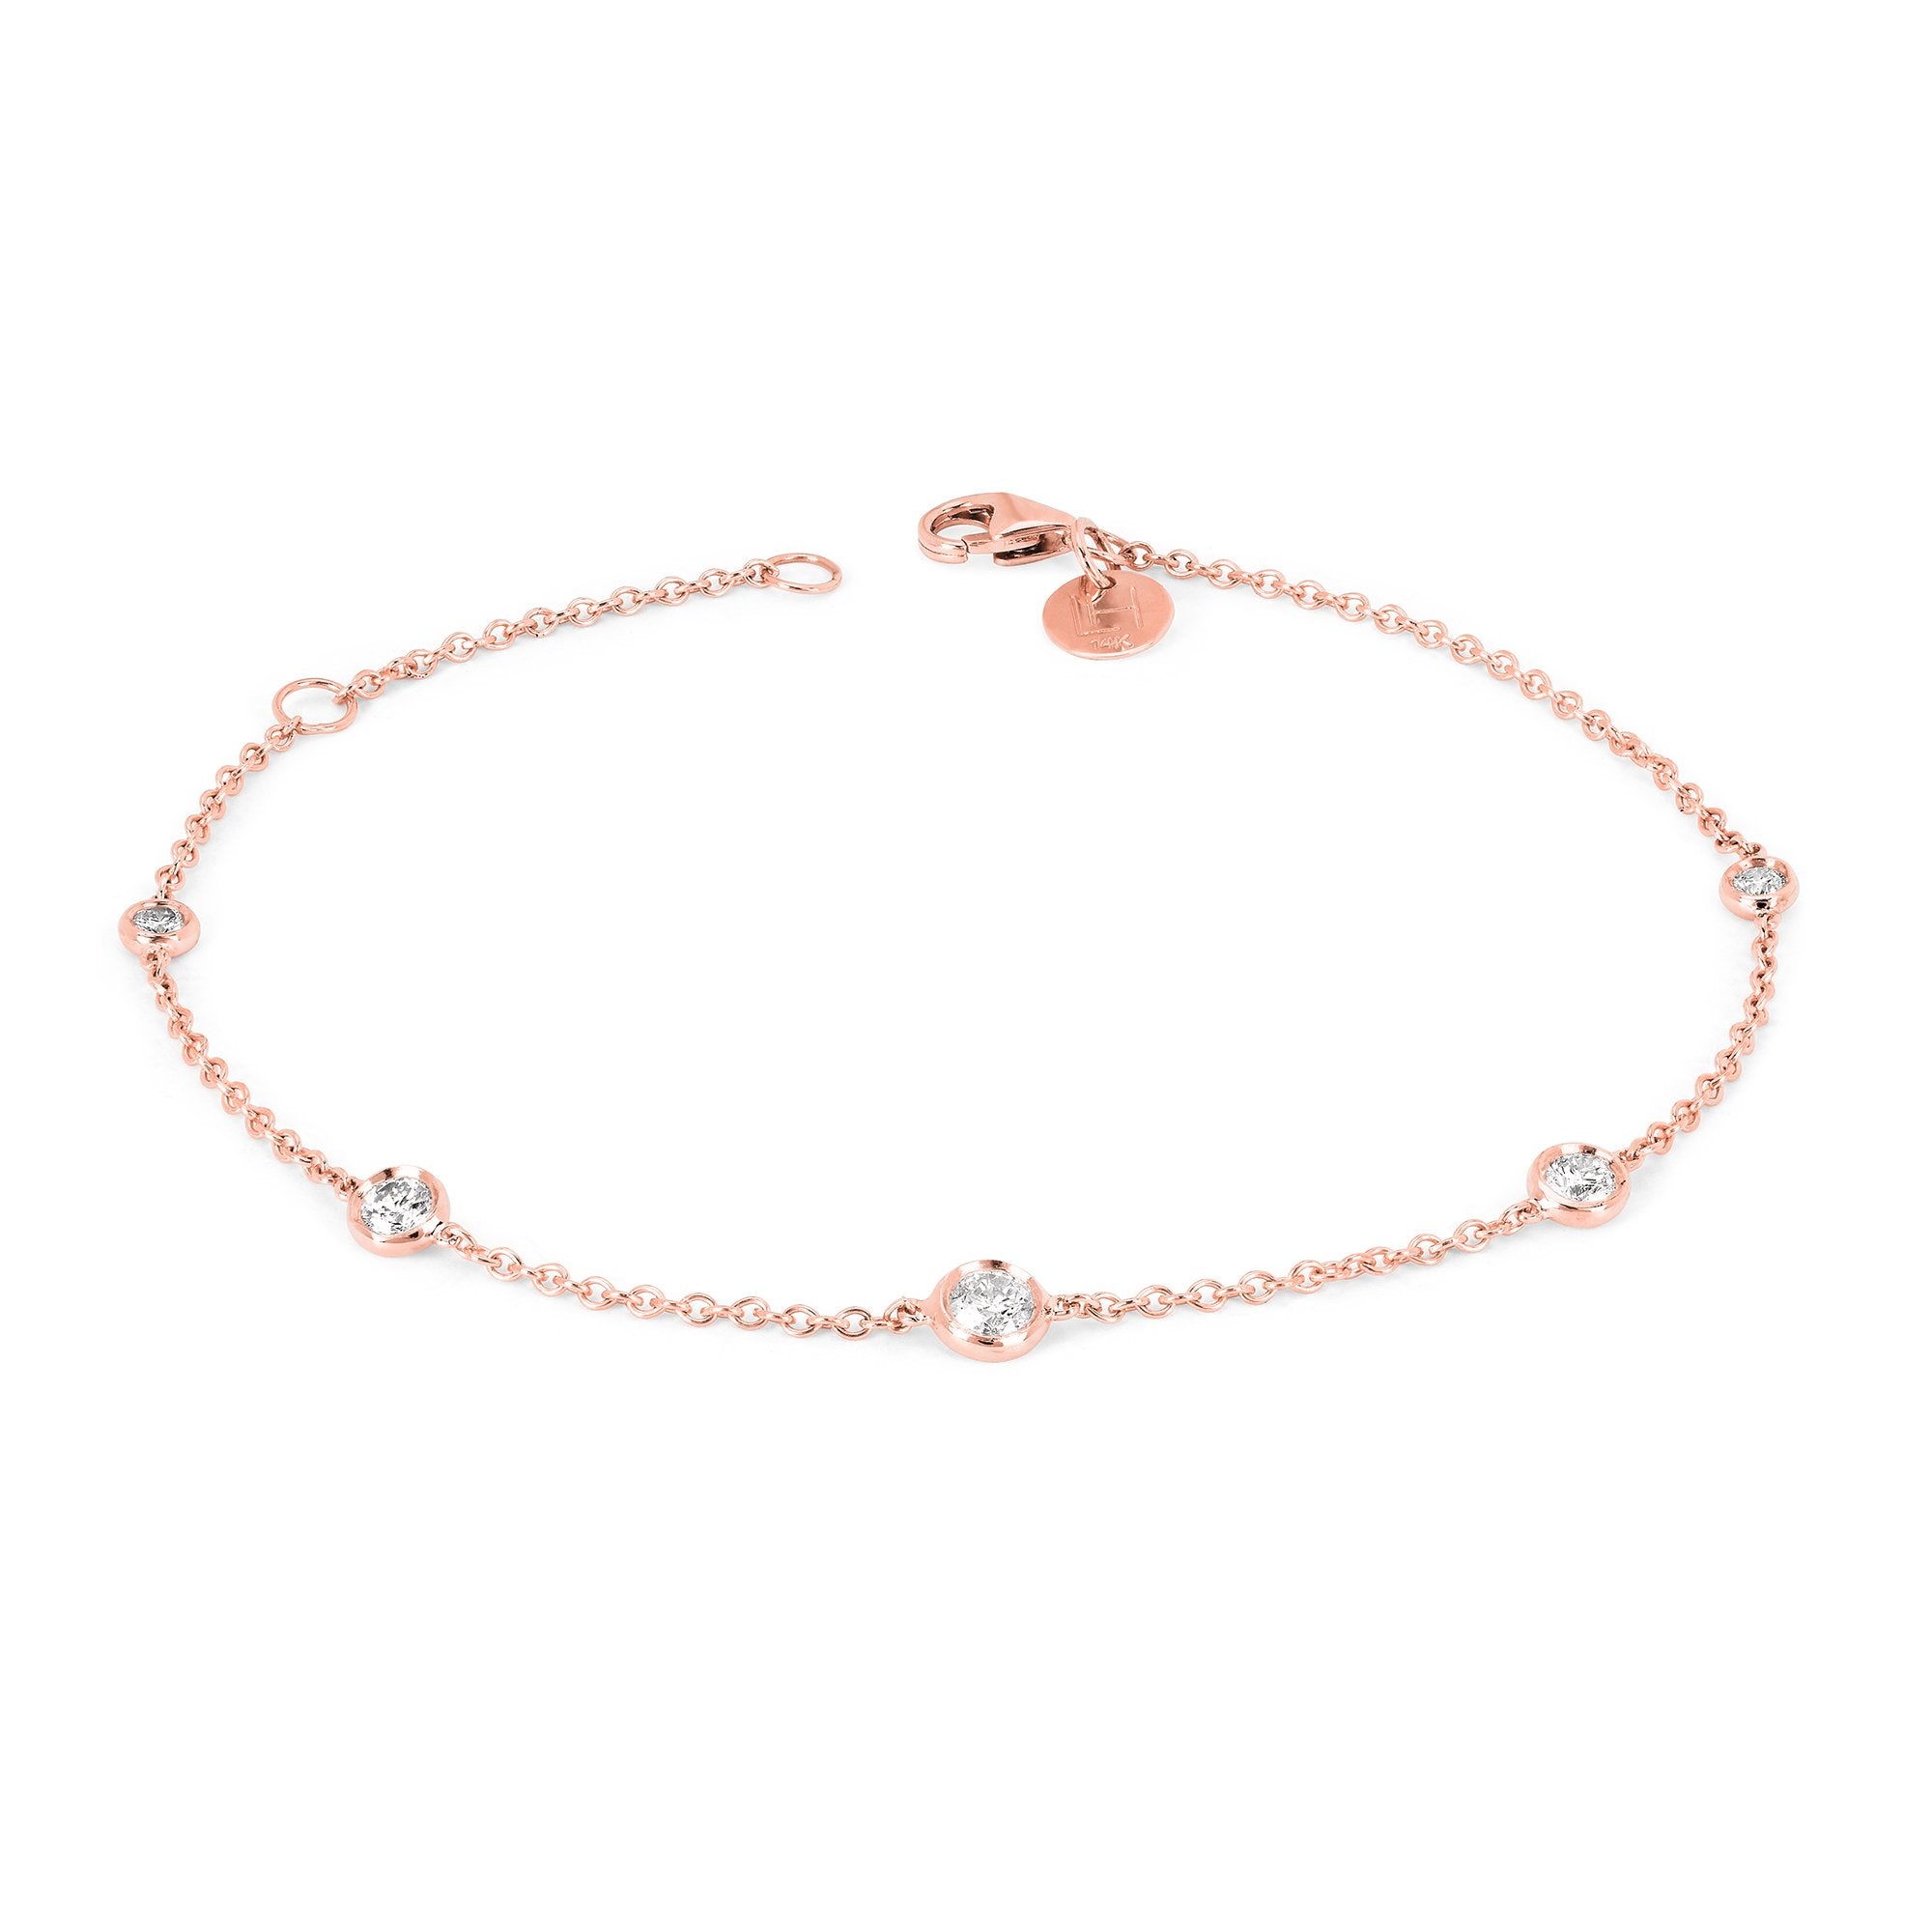 Bracelets - Logan Hollowell Jewelry